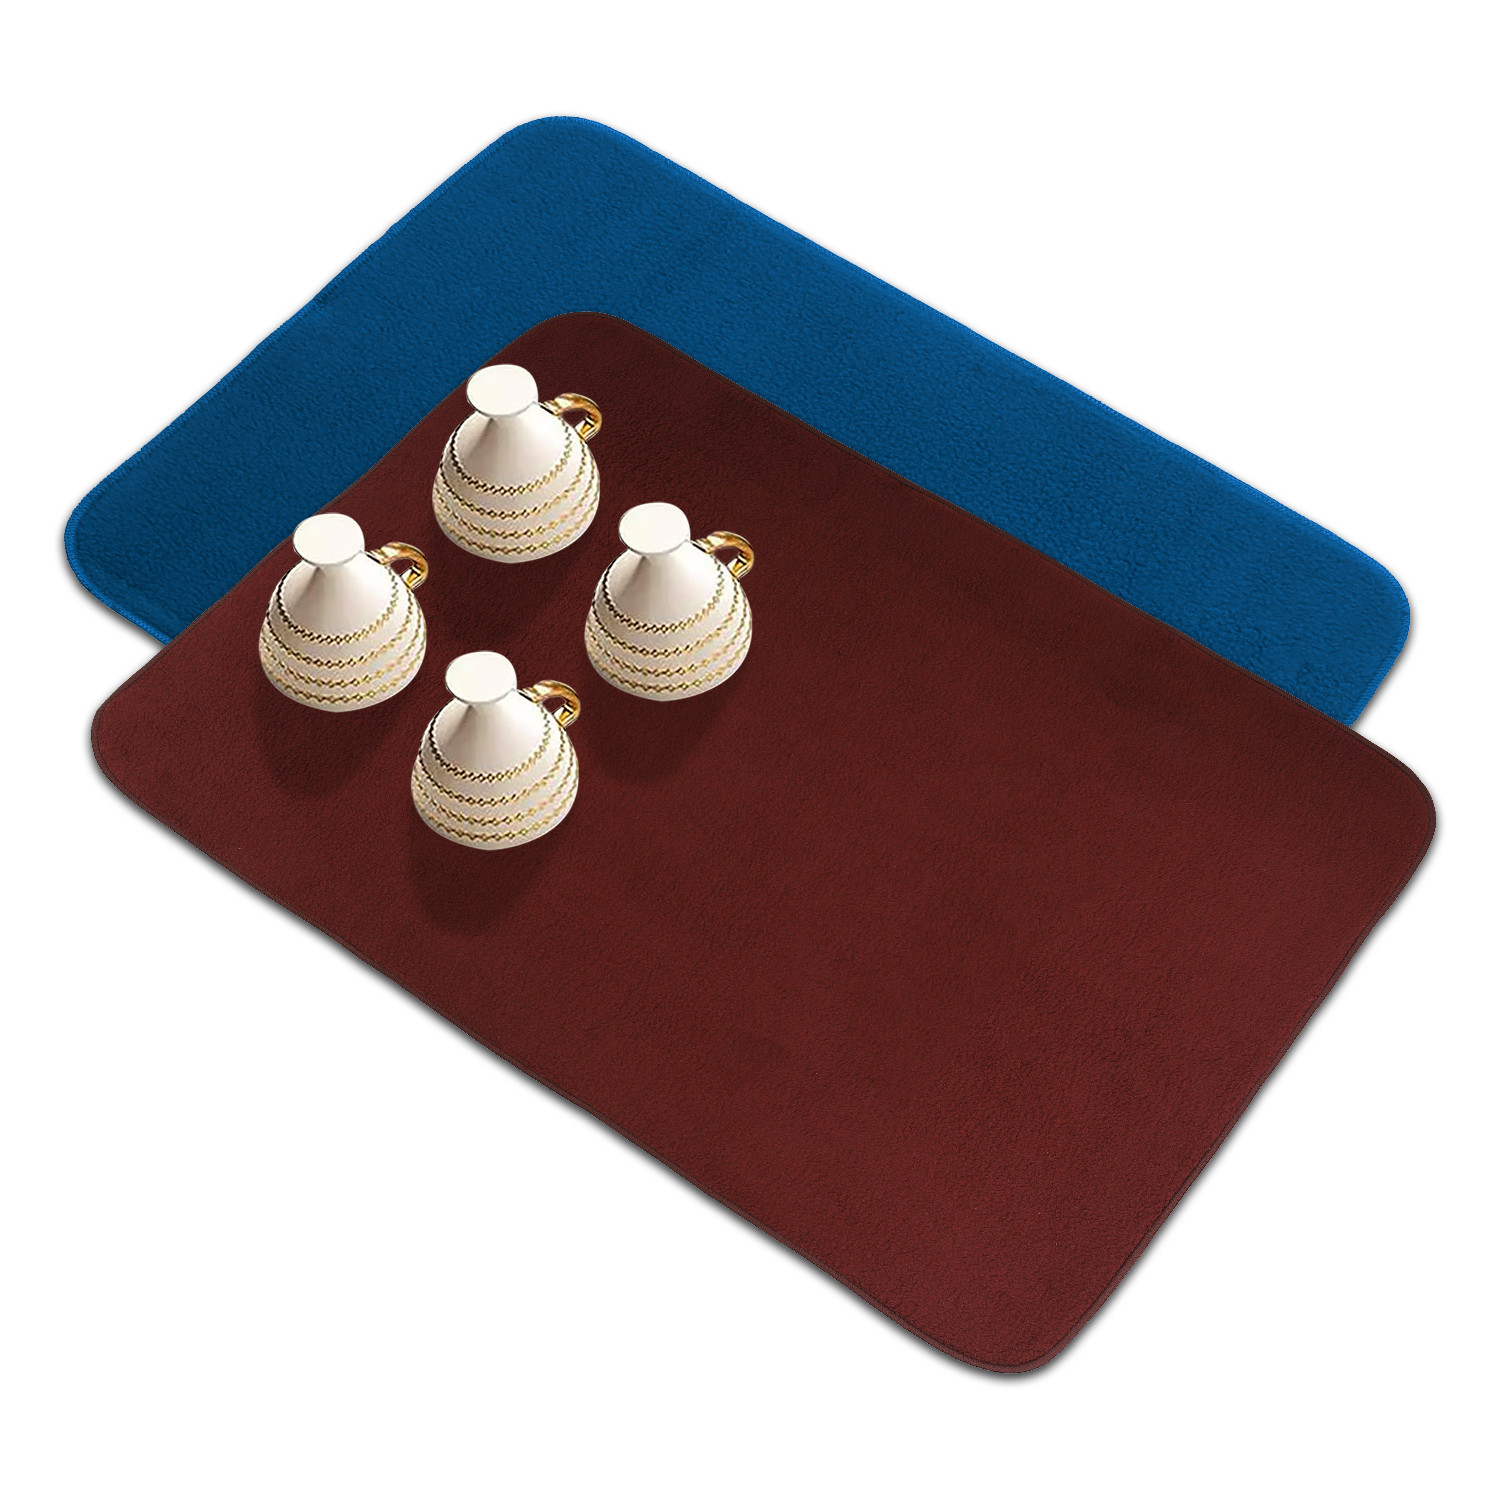 Kuber Industries Dish Dry Mat | Microfiber Drying Mat | Reversible Kitchen Drying Mat | Absorbent Mat | Kitchen Dish Dry Mat | 38x50 | Pack of 2 | Blue & Maroon